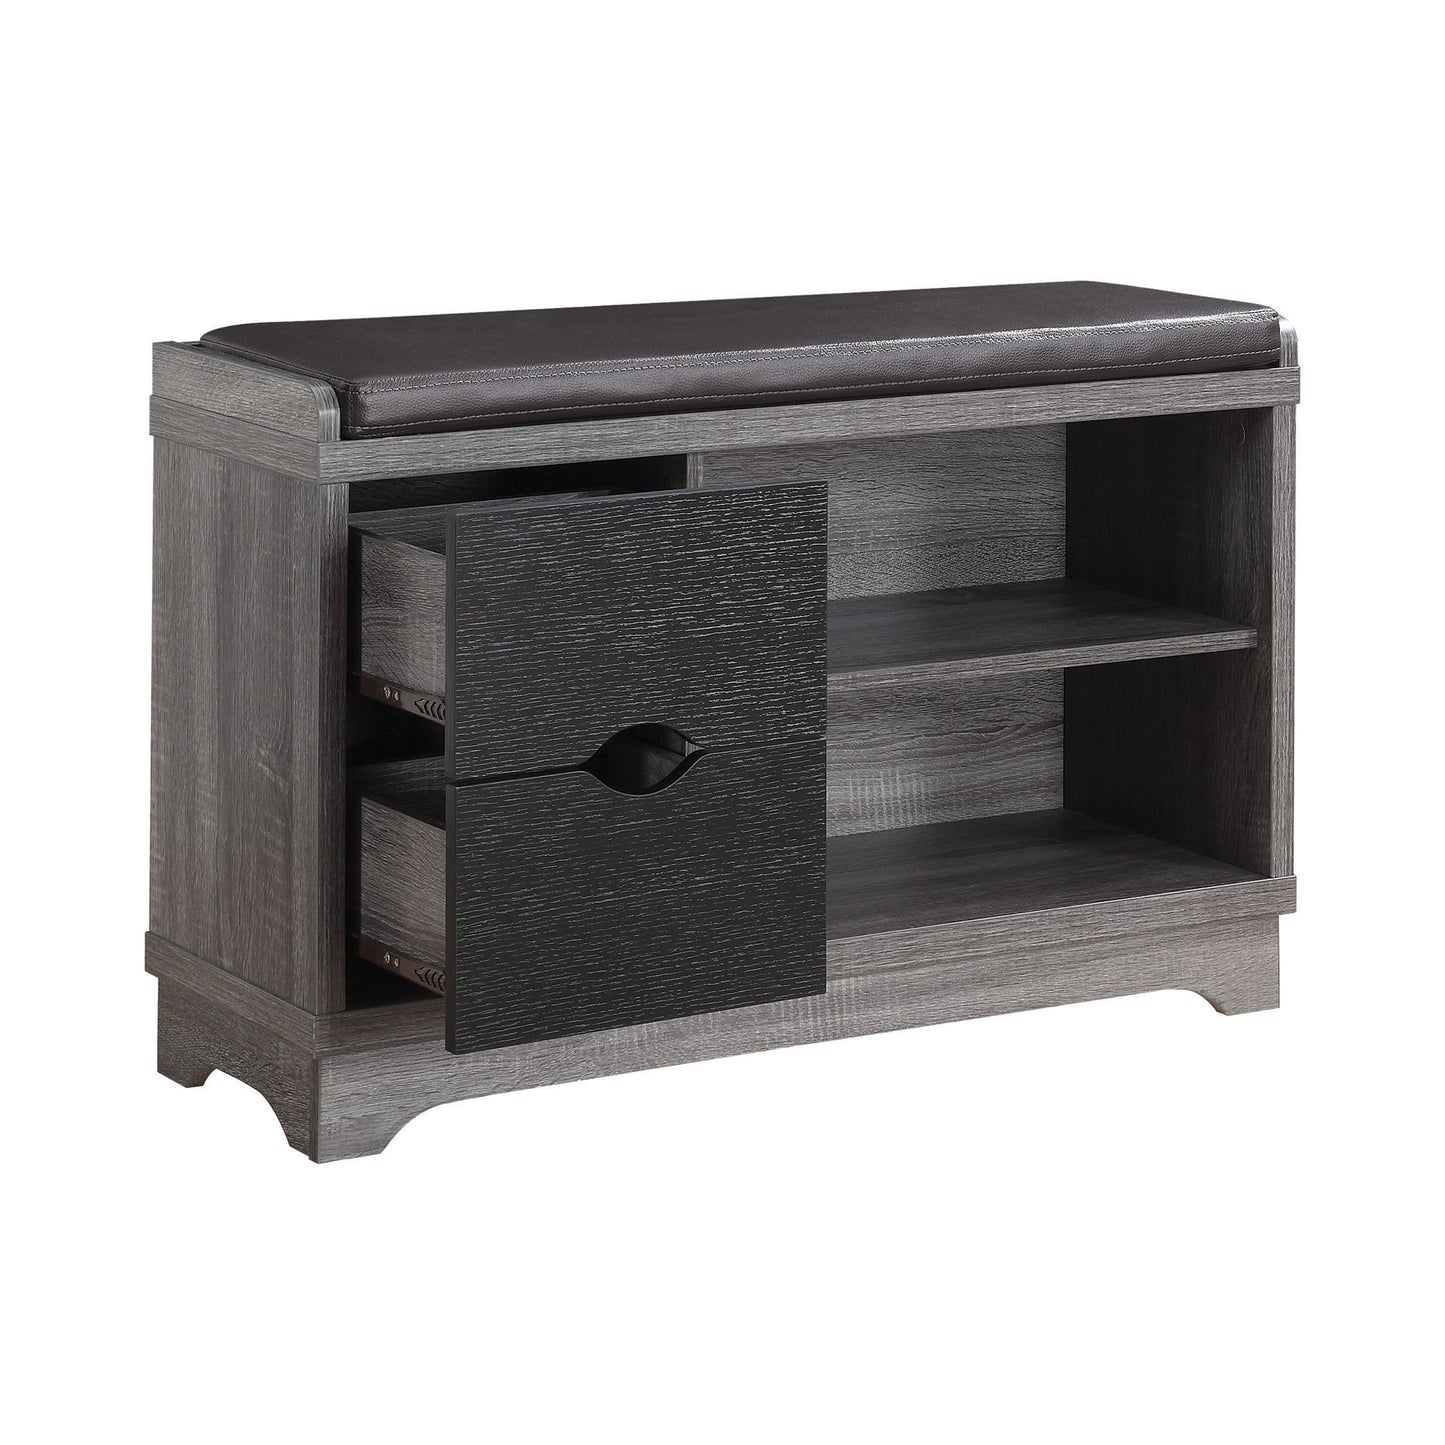 2-drawer Storage Bench Medium Brown and Black